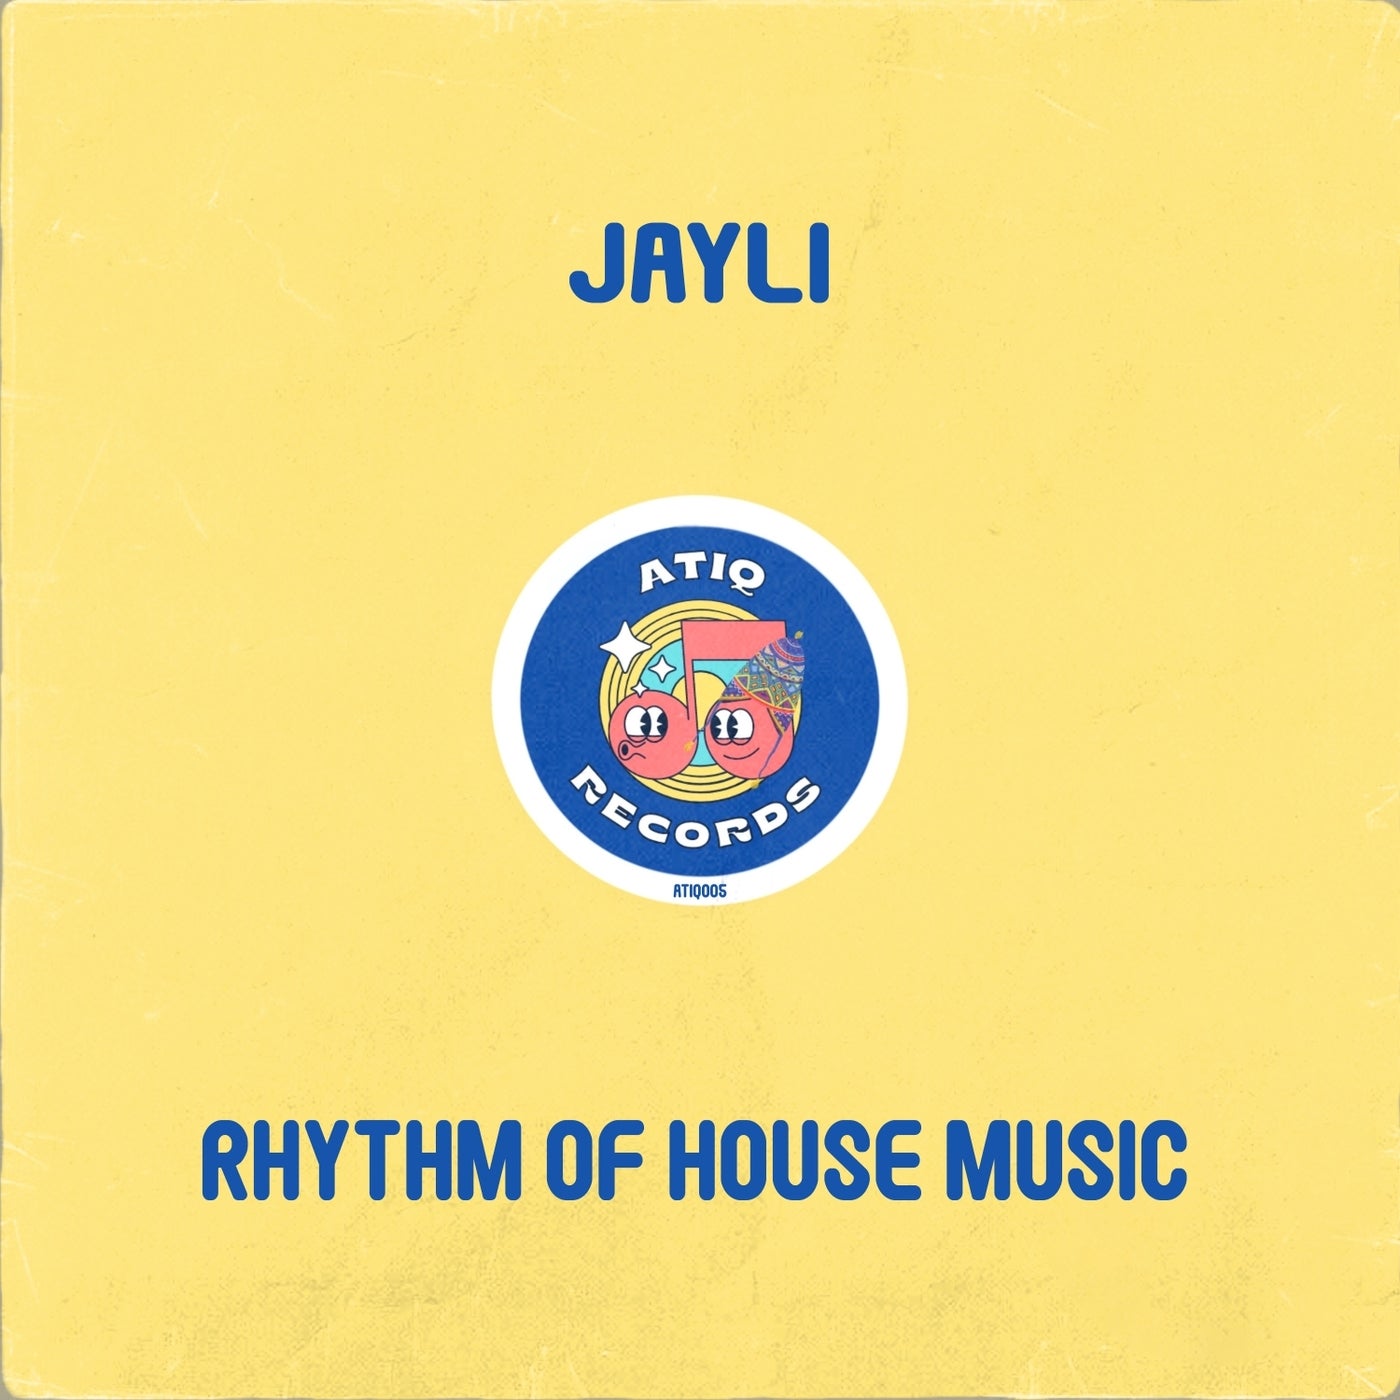 Rhythm of House Music